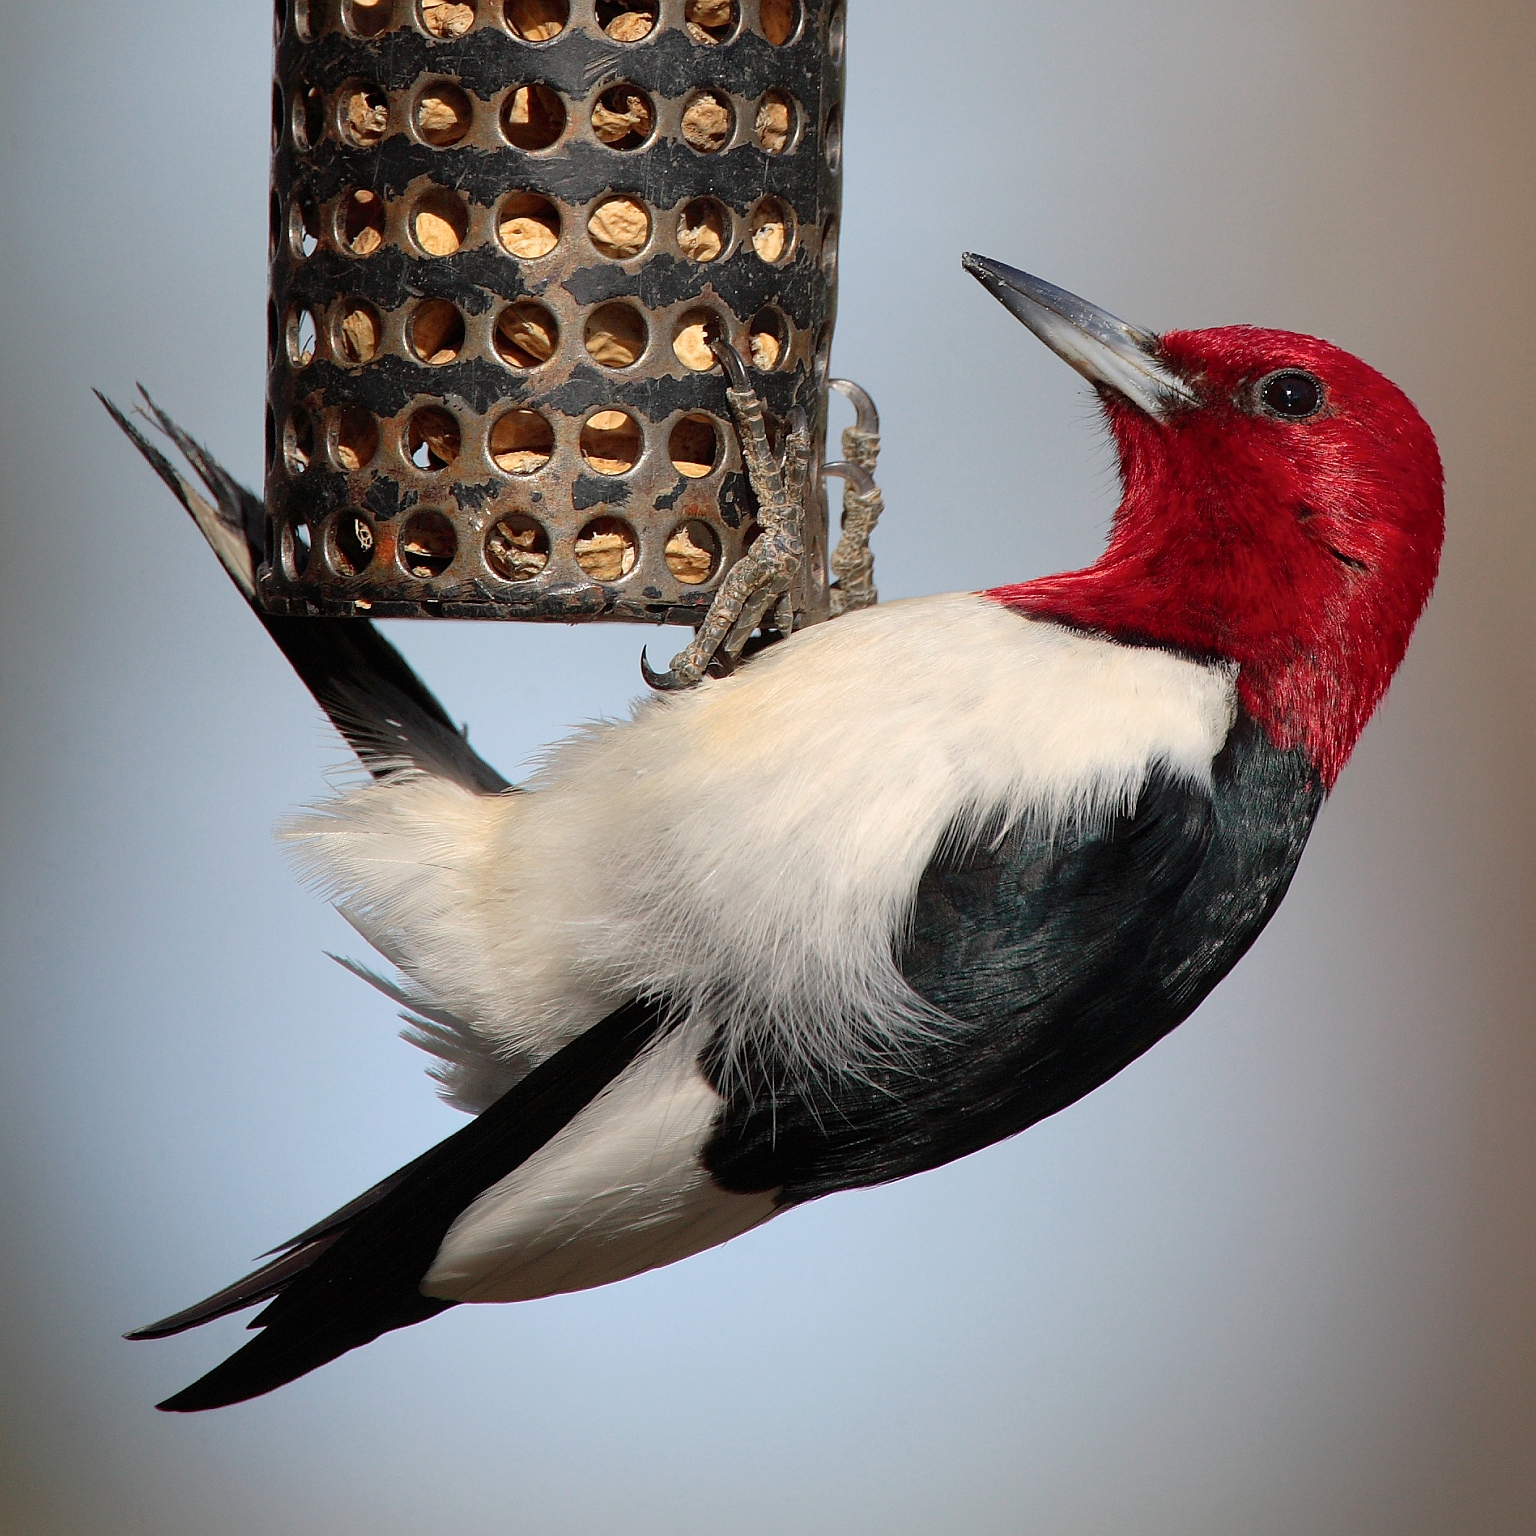 Vibrant Beak: The Bird with a Red Head and Long Beak